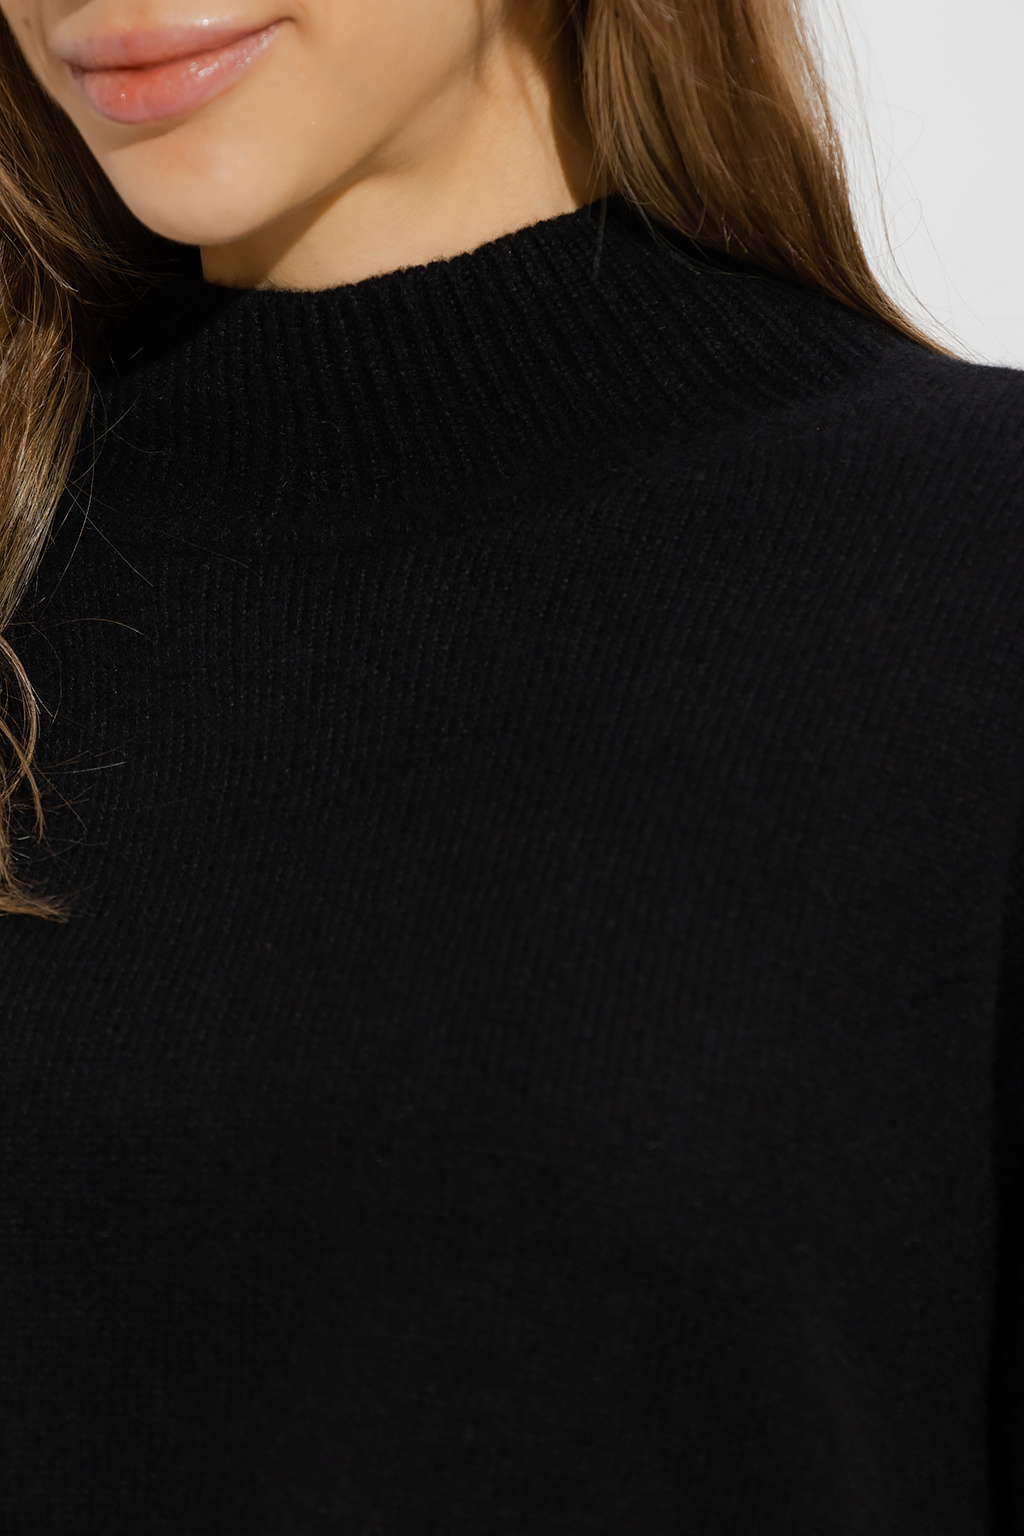 AllSaints ‘Orion’ cashmere Caract sweater